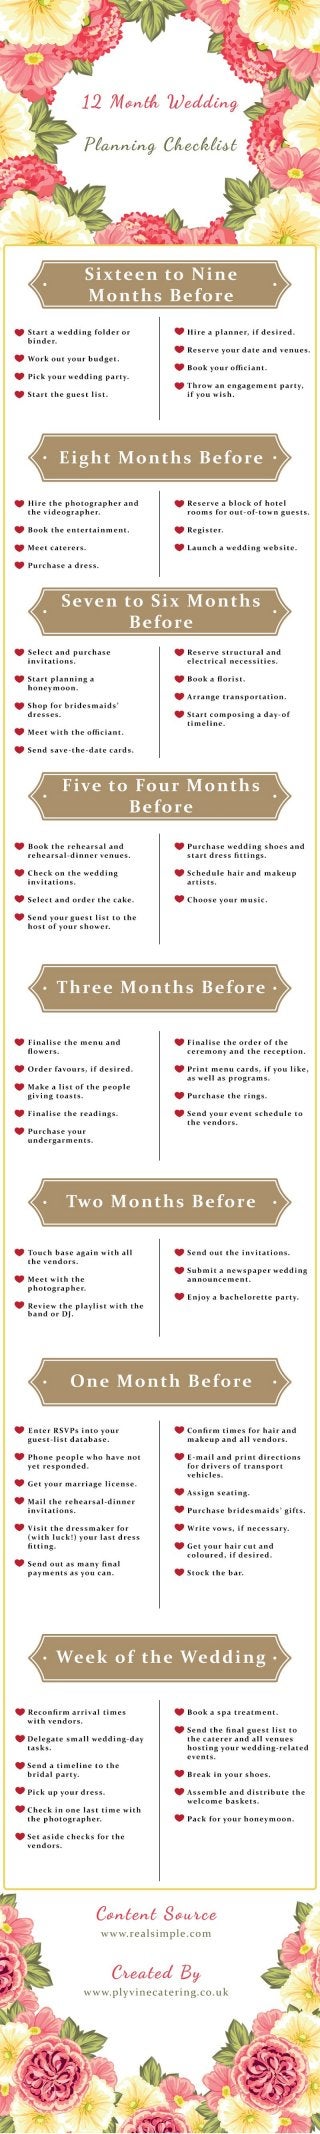 The ultimate wedding planning checklist